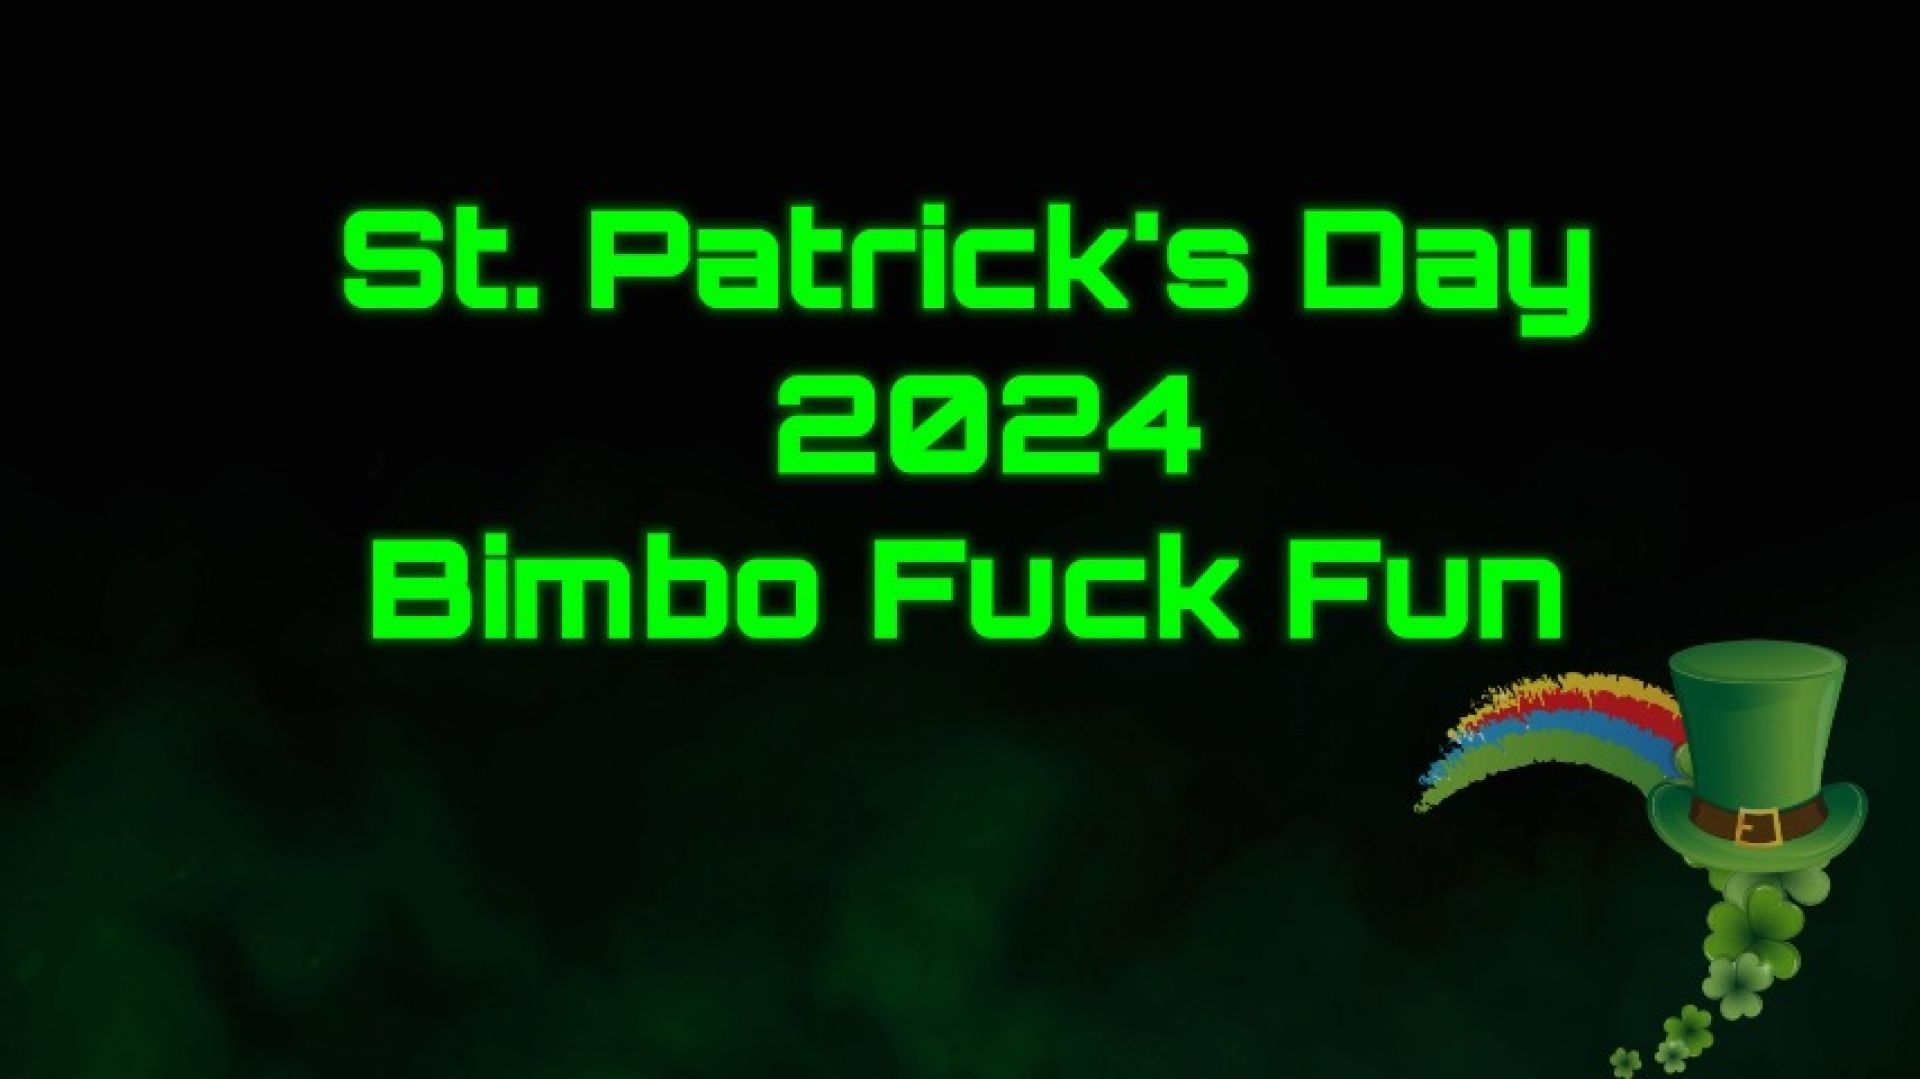 St. Patrick's Day 2024 Bimbo Fuck Fun